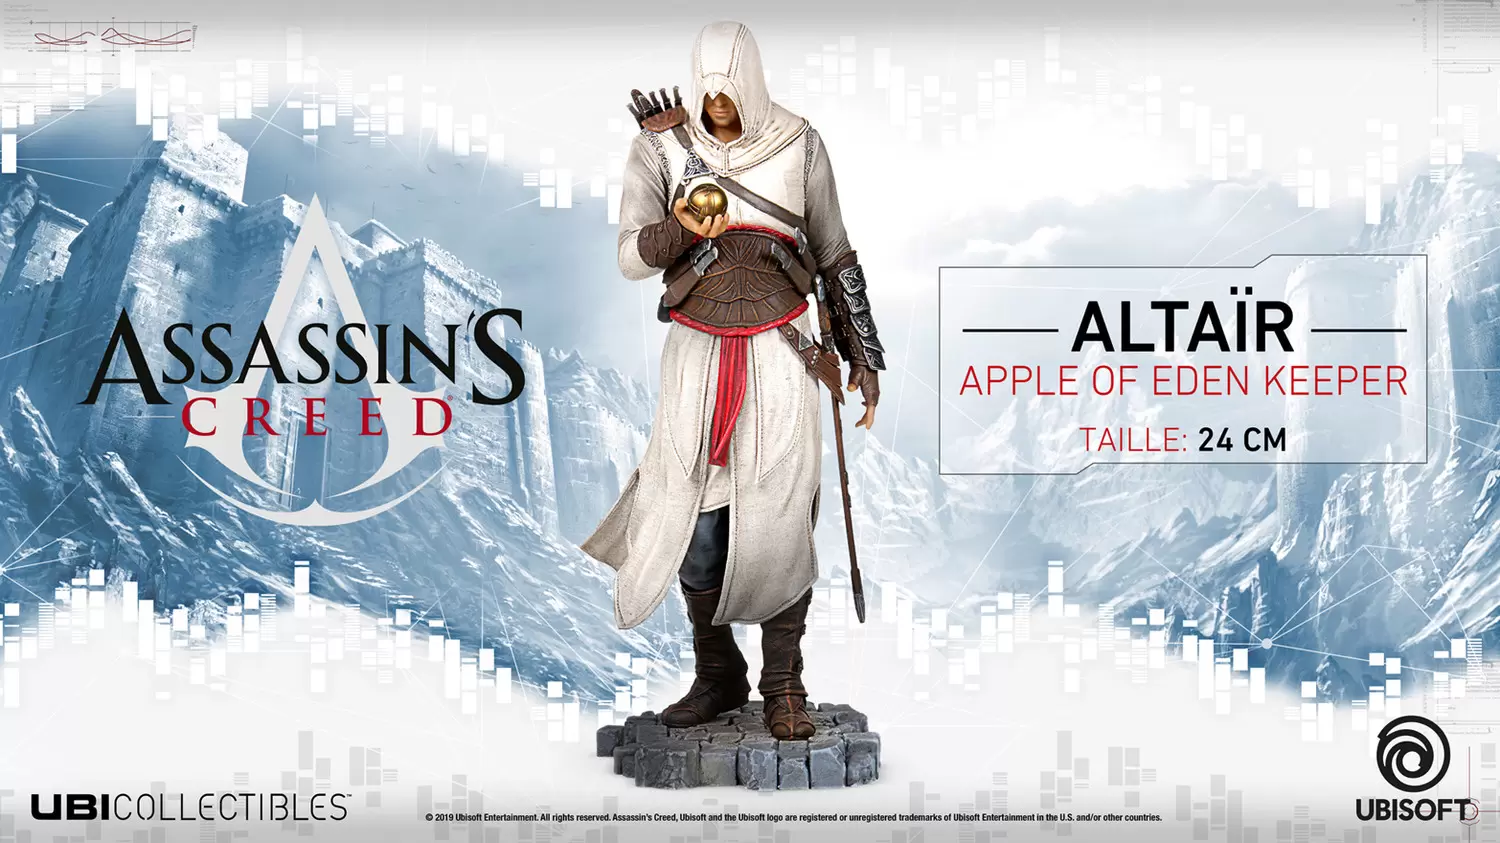 UBI Collectibles - Assassin’s Creed: Altaïr - Apple of Eden Keeper